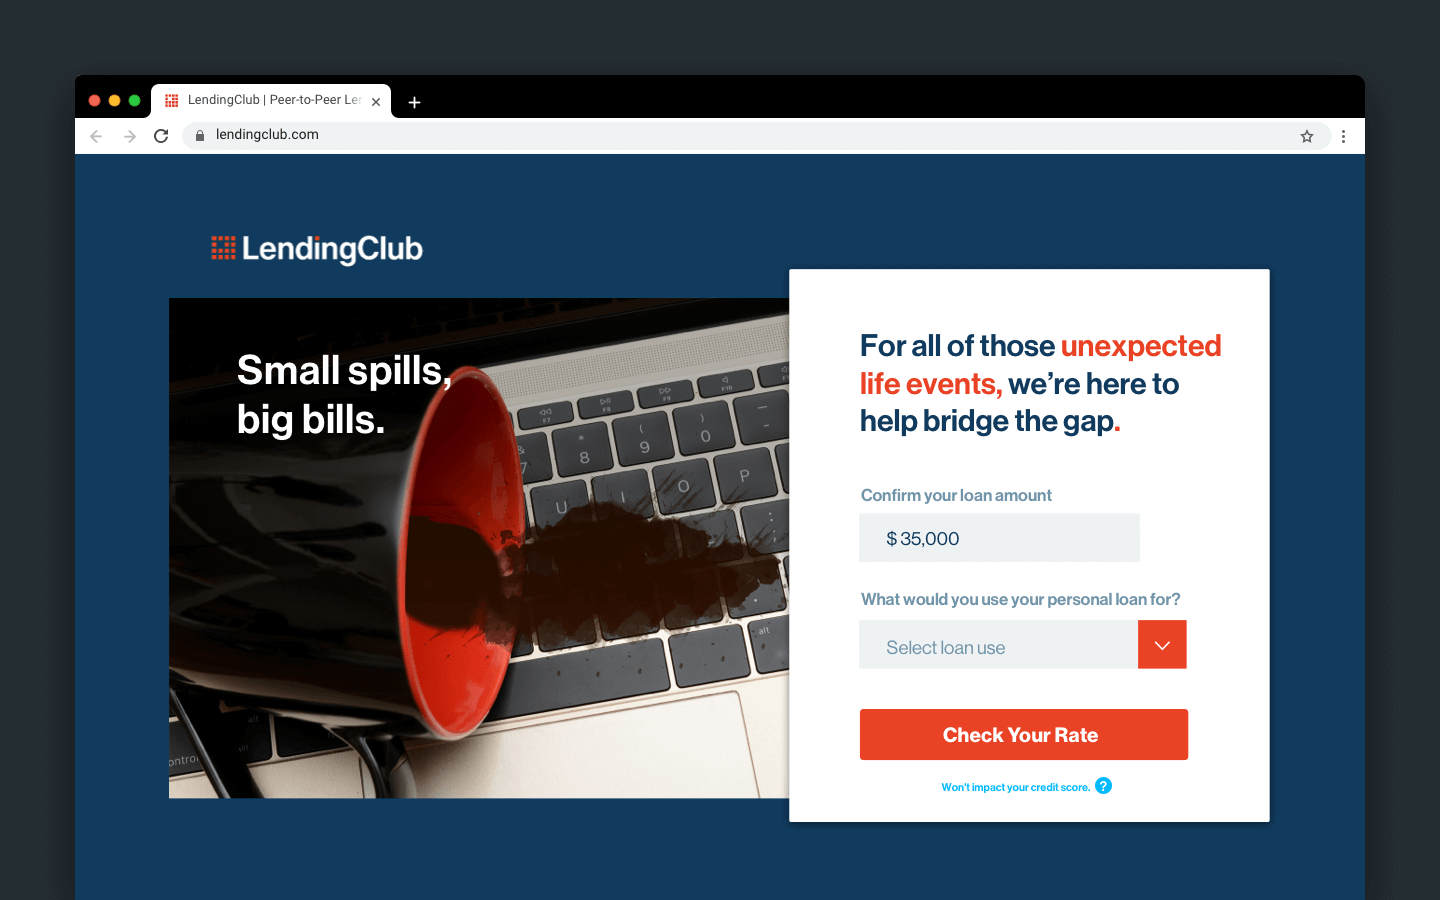 A screenshot of the LendingClub website with the caption “Small spills, big bills.”